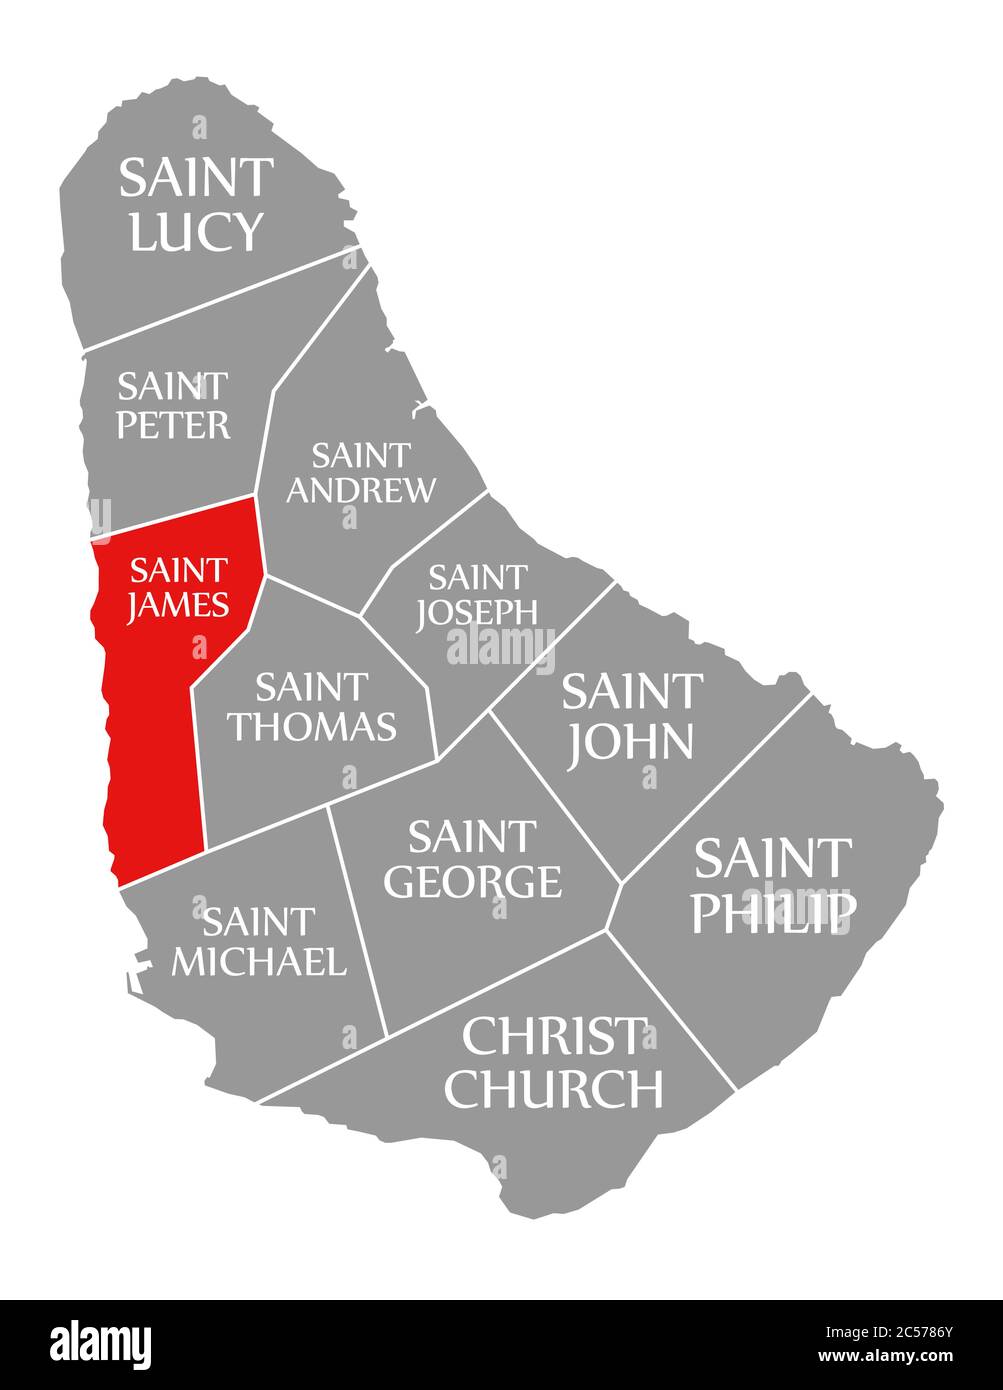 Saint James rot hervorgehoben in der Karte von Barbados Stockfoto